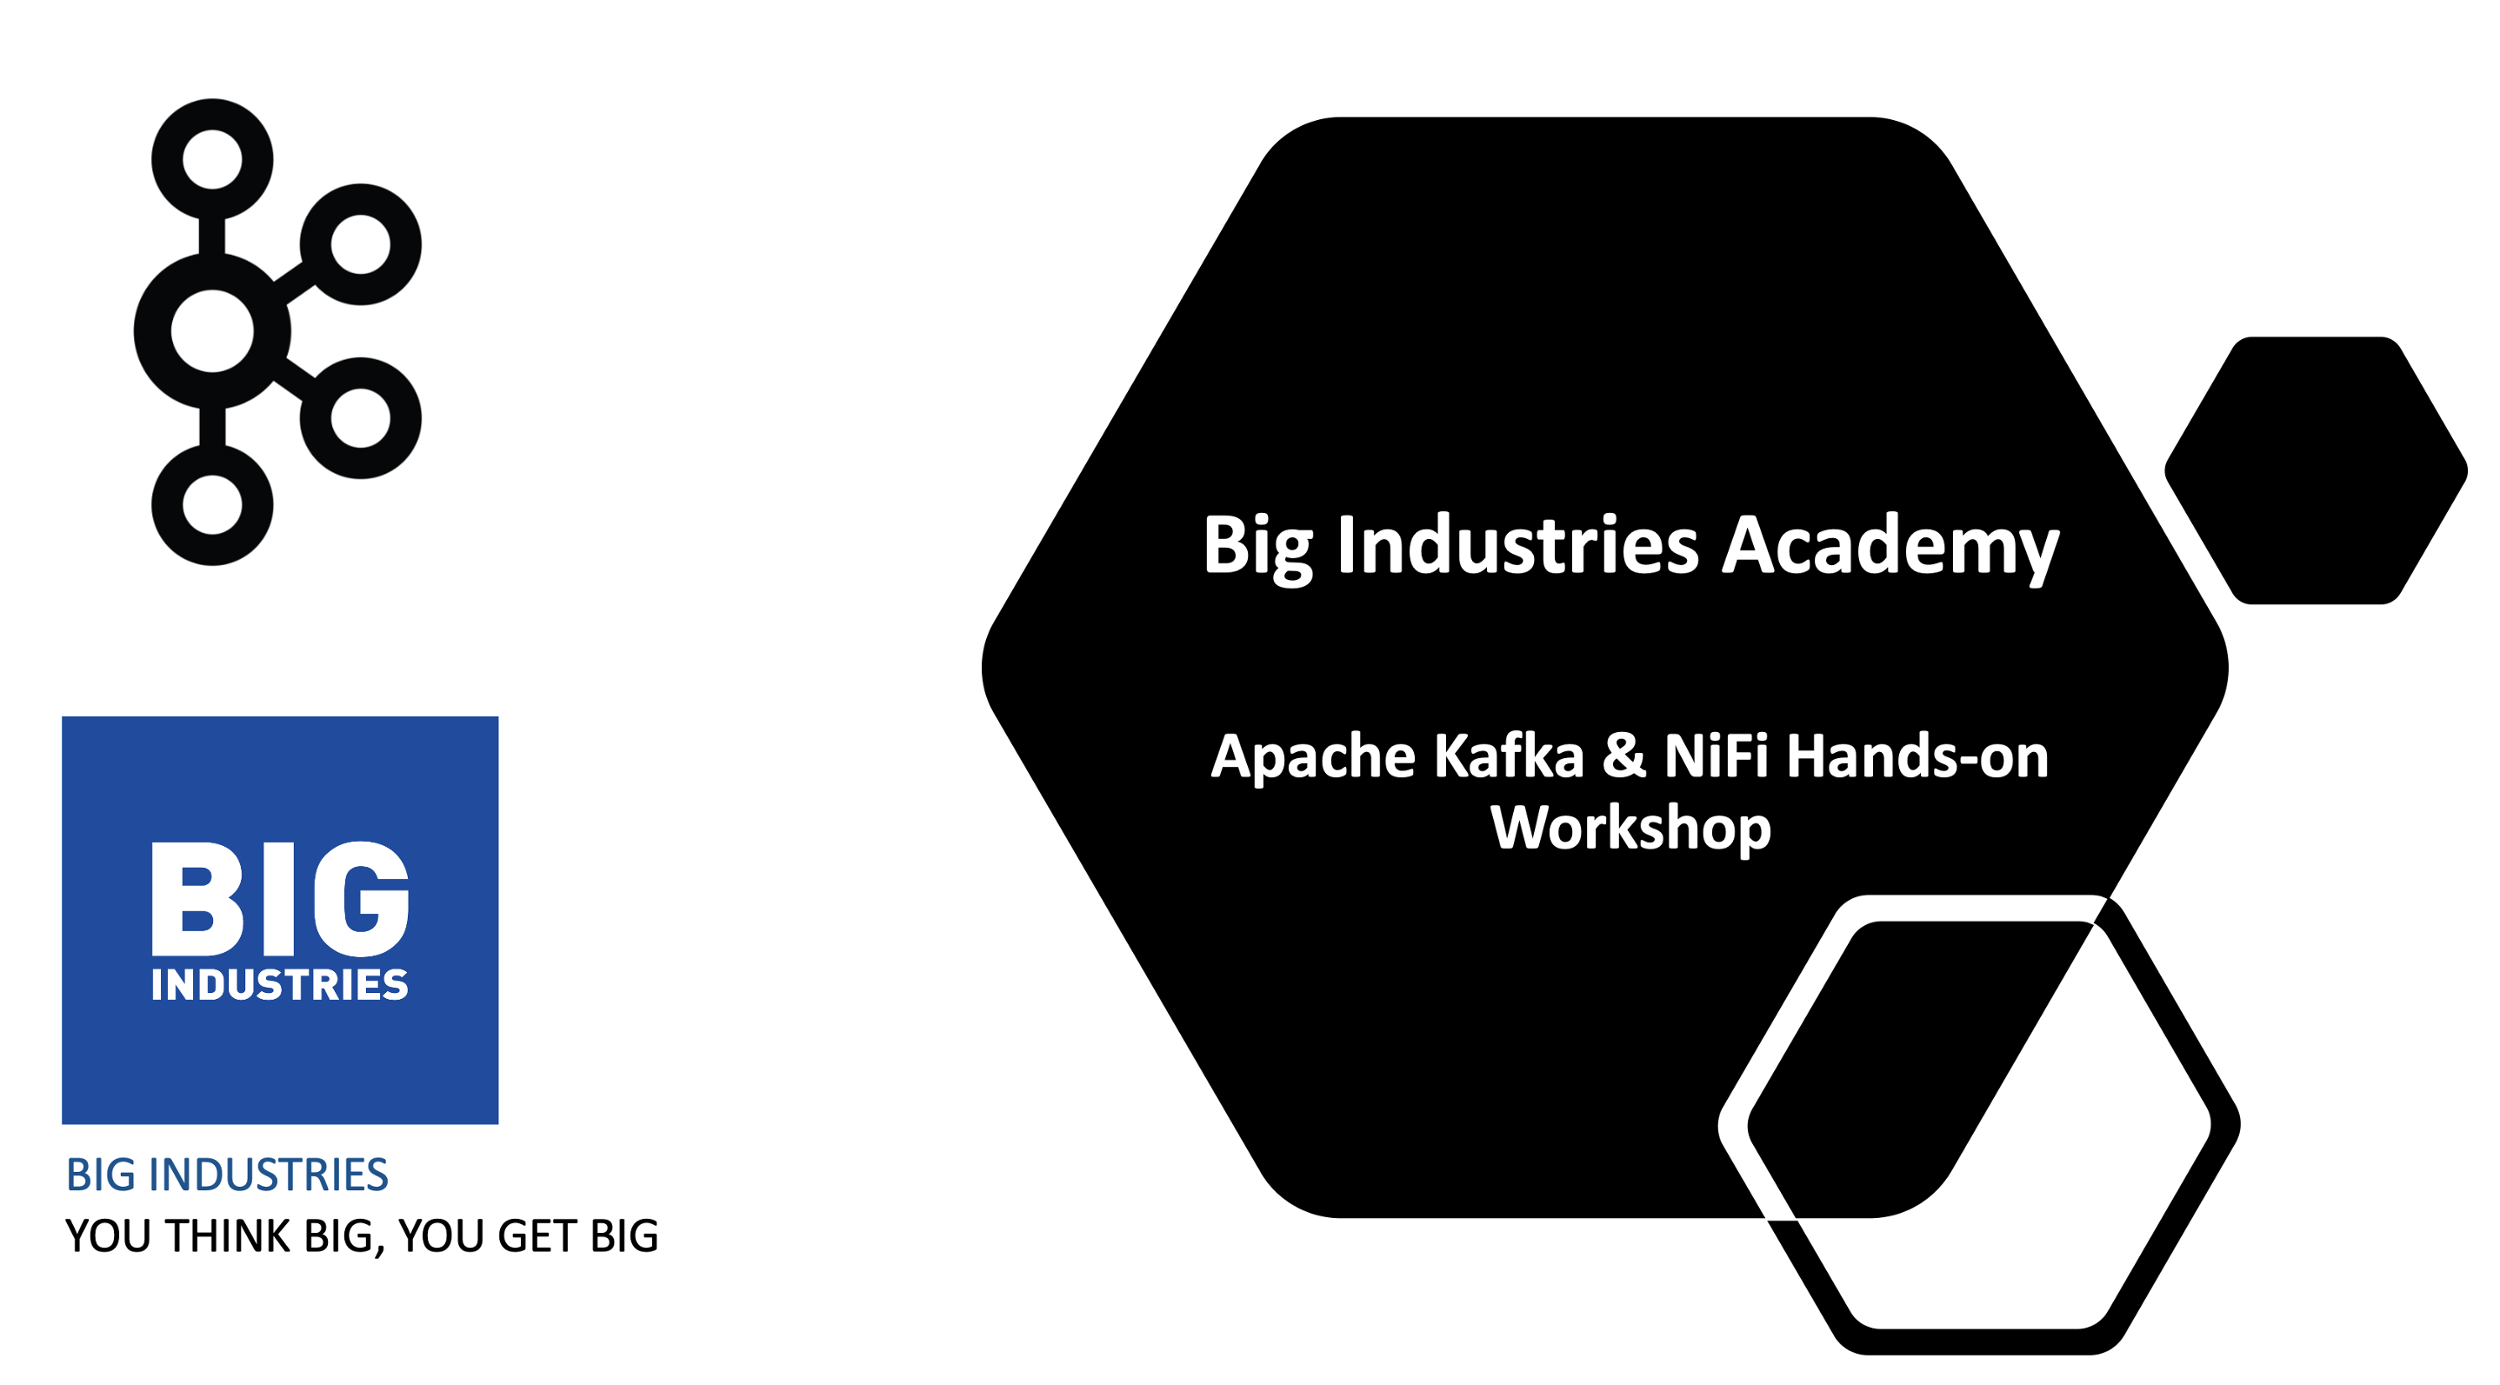 Apache Kafka & Nifi hands-on workshop